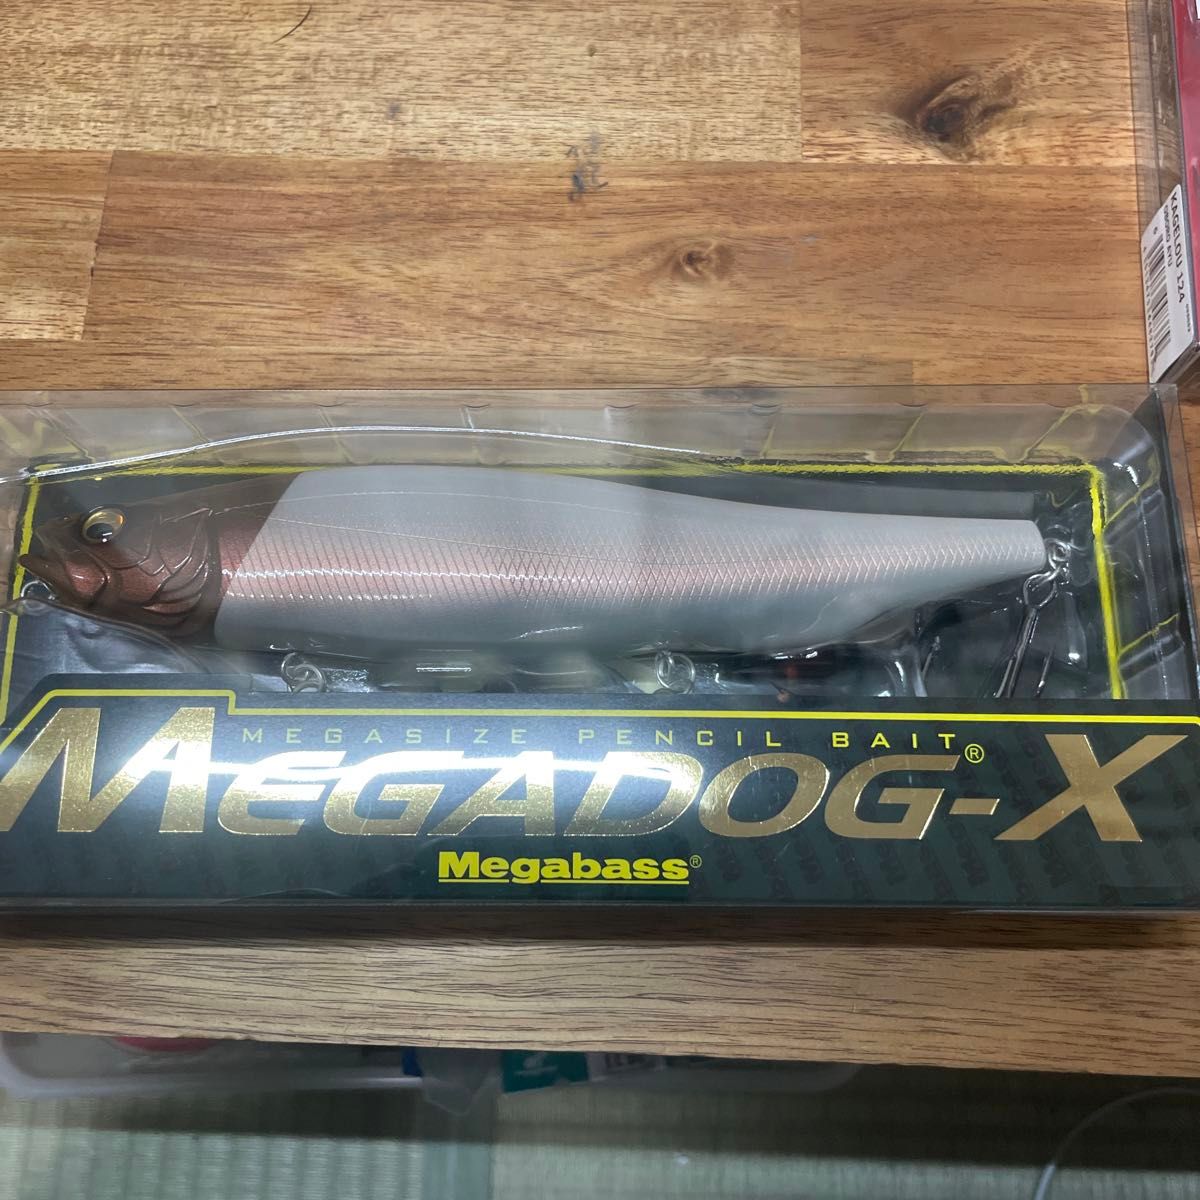 MEGADOG Megabass メガドッグ ビッグベイト